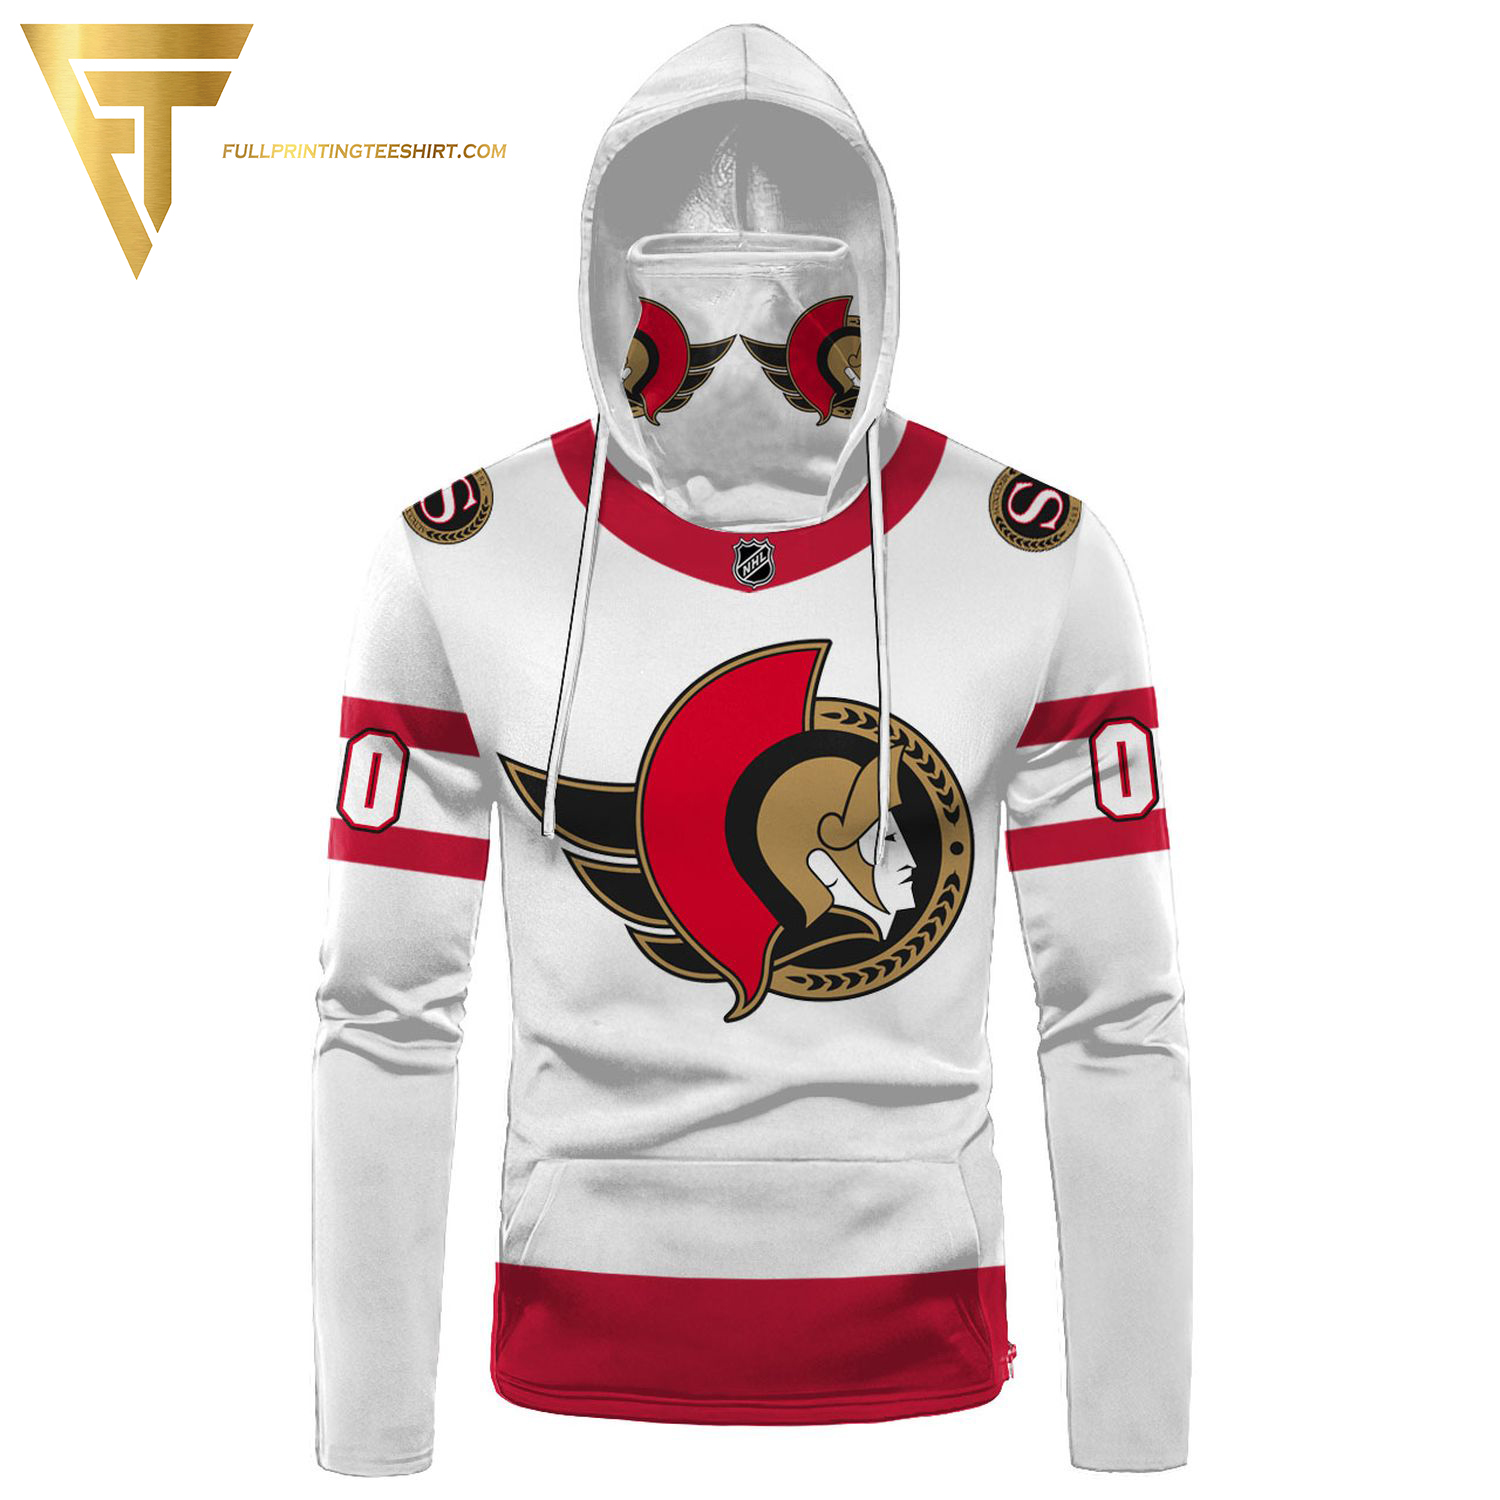 Custom The Ottawa Senators NHL Full Print Shirt